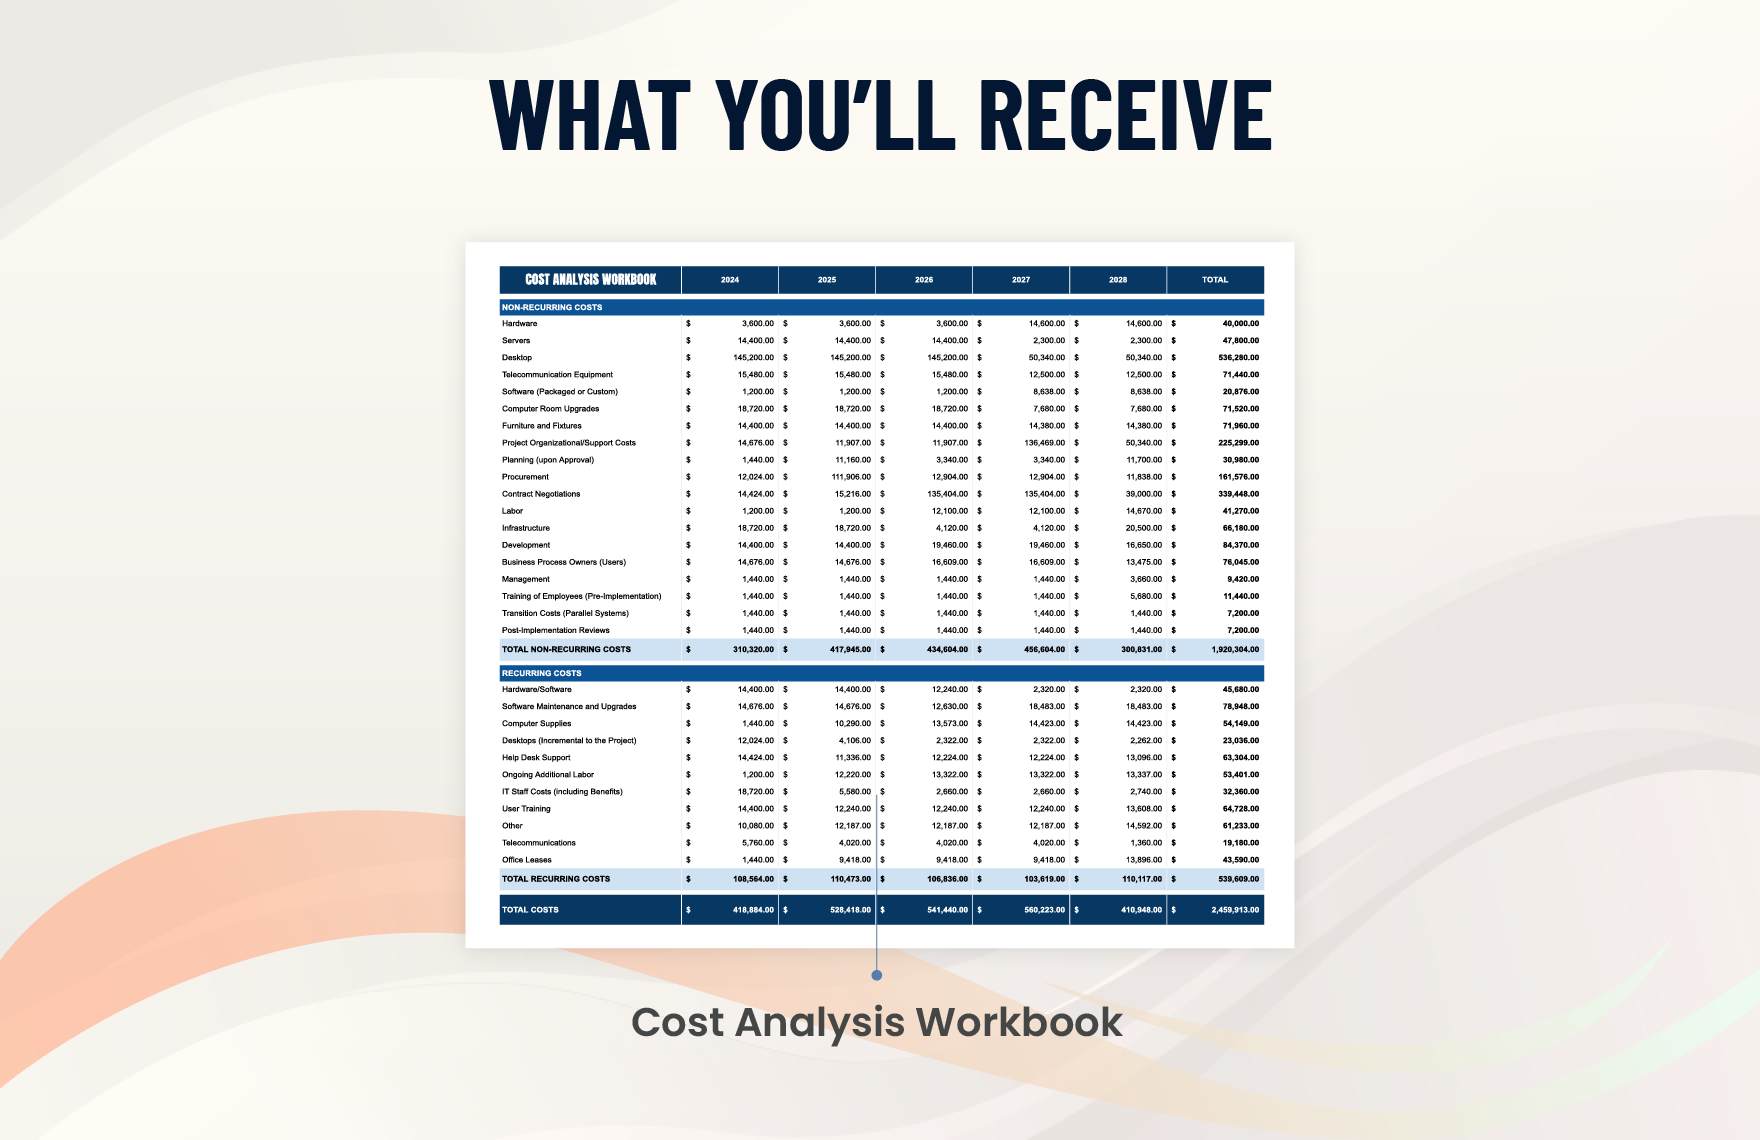 Cost Analysis Workbook Template